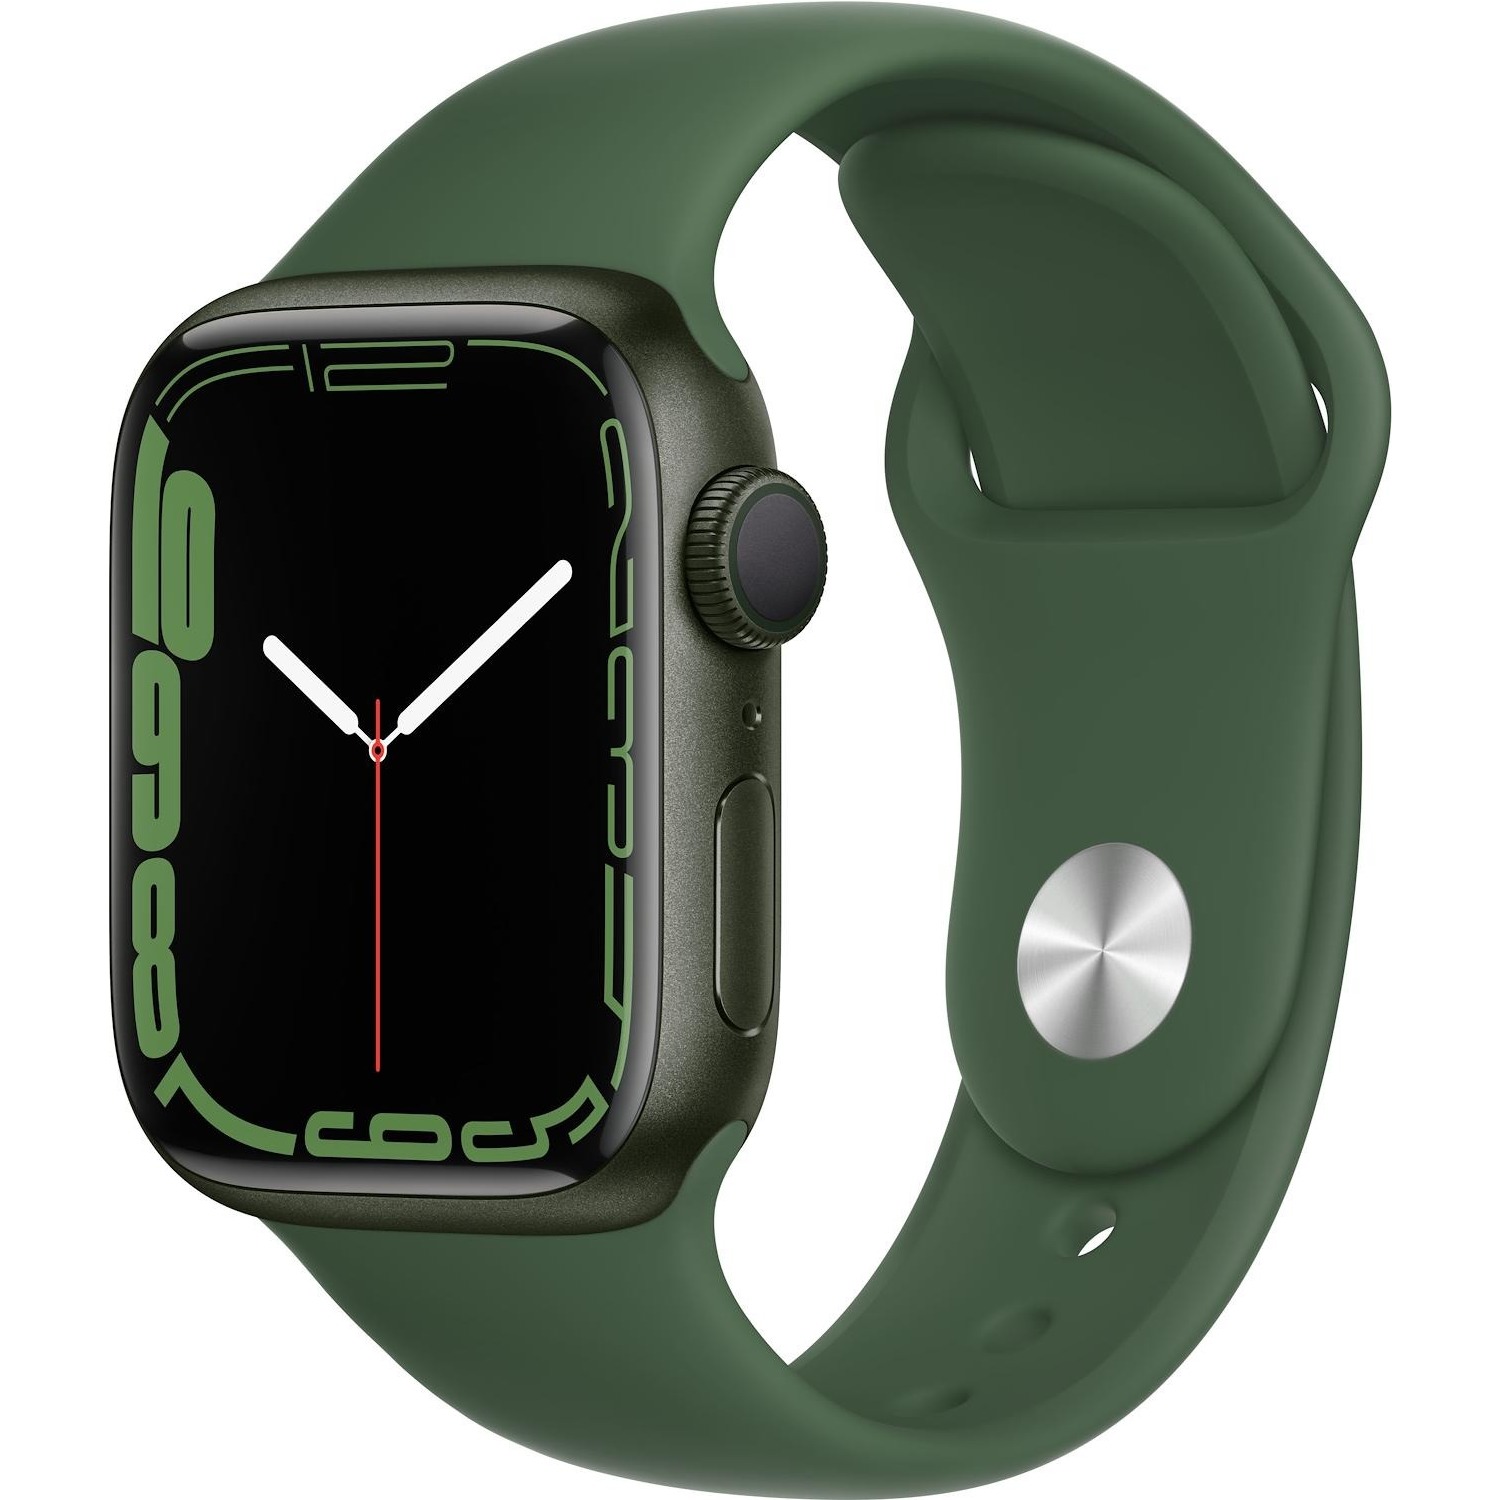 Immagine per Smartwatch Apple Watch Serie 7 GPS cassa 41mm in alluminio verde con cinturino sport verde da DIMOStore